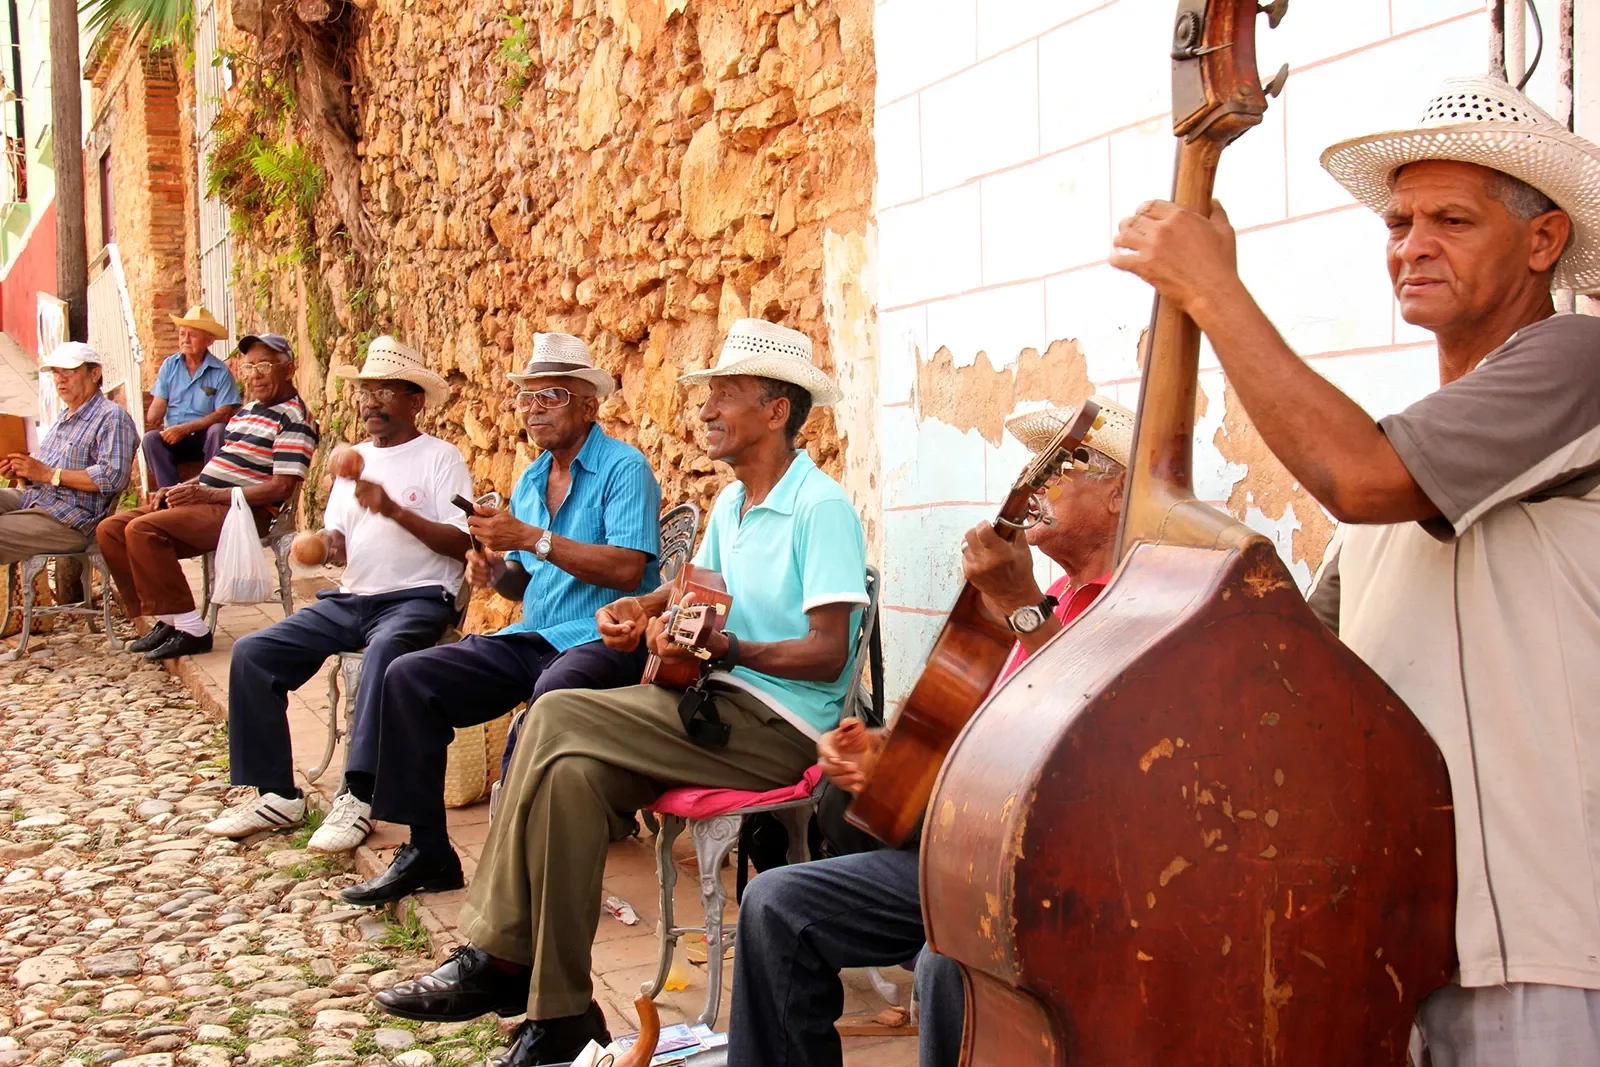 Street Performers Cuba